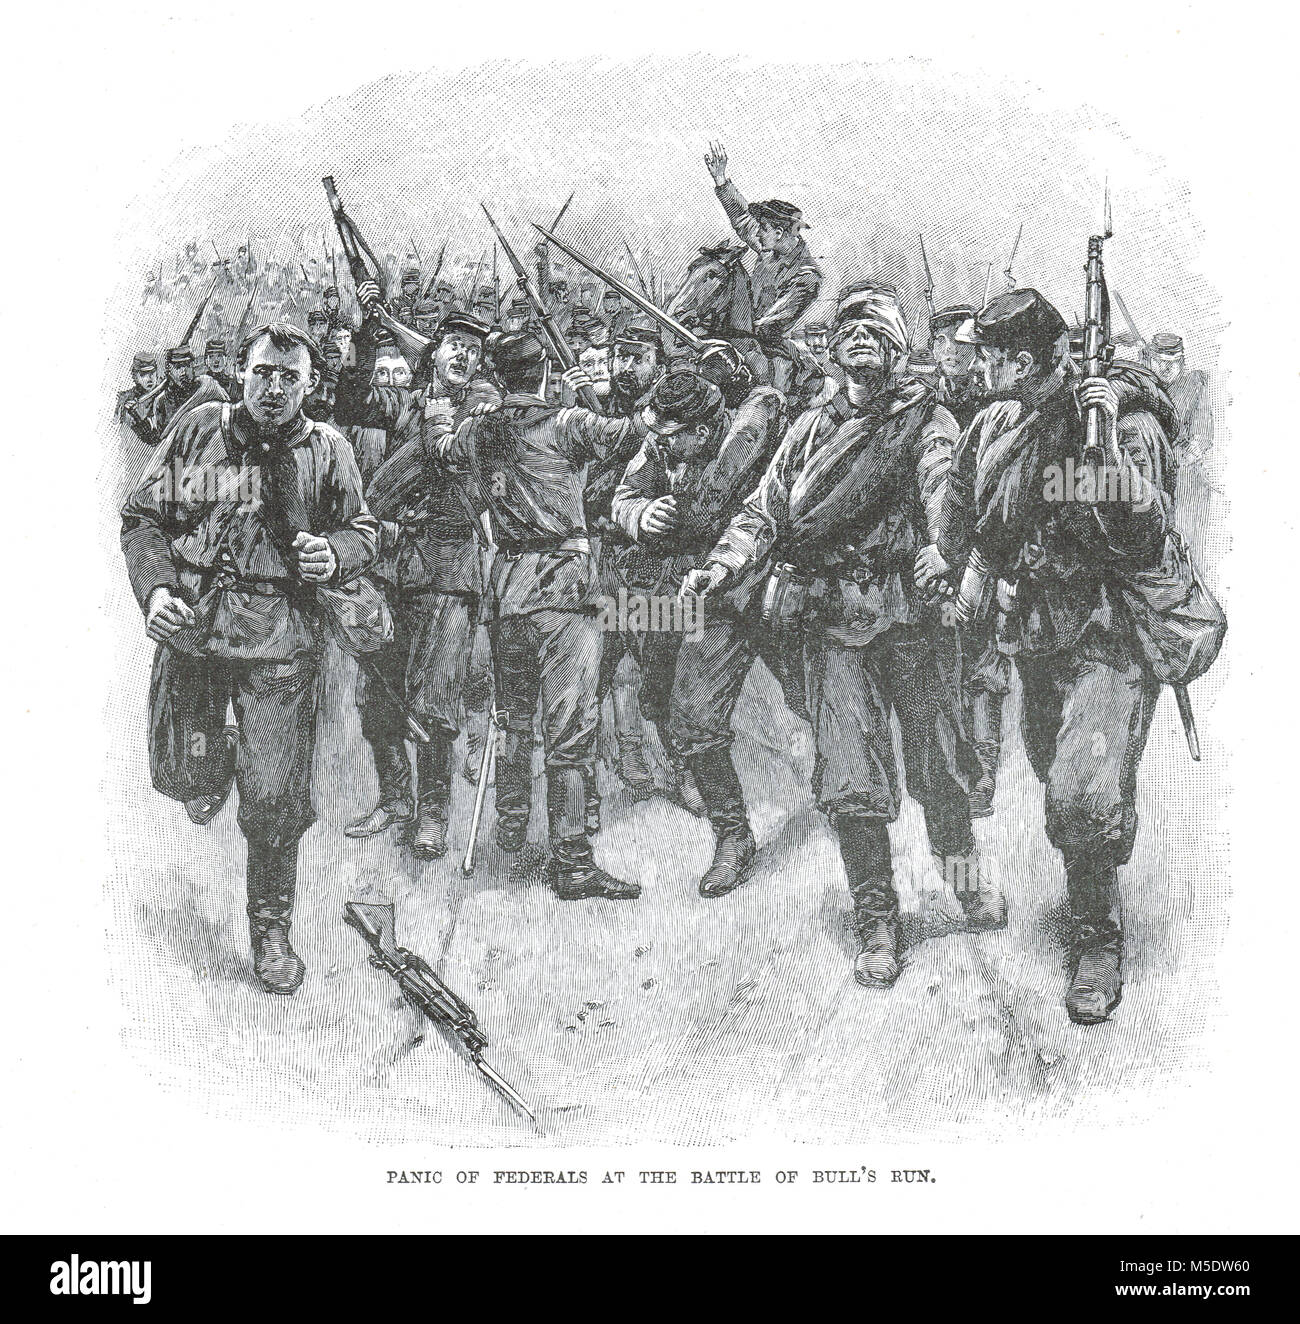 Pánico de las tropas federales, la primera batalla de Bull Run, el 21 de julio de 1861, la primera gran batalla de la Guerra Civil Americana Foto de stock